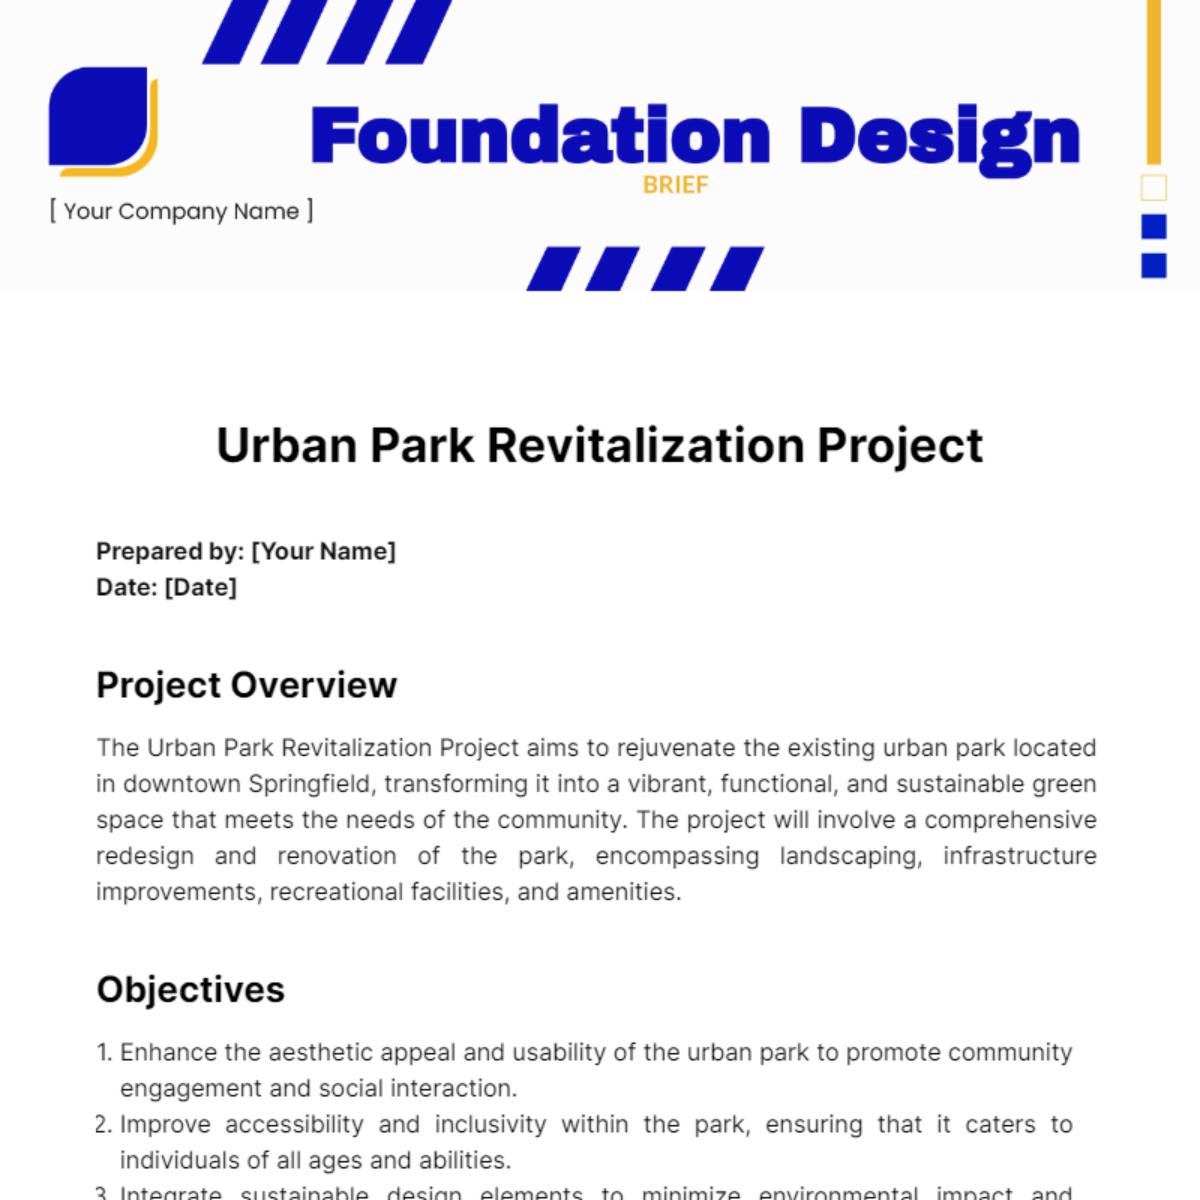 Free Foundation Design Brief Template